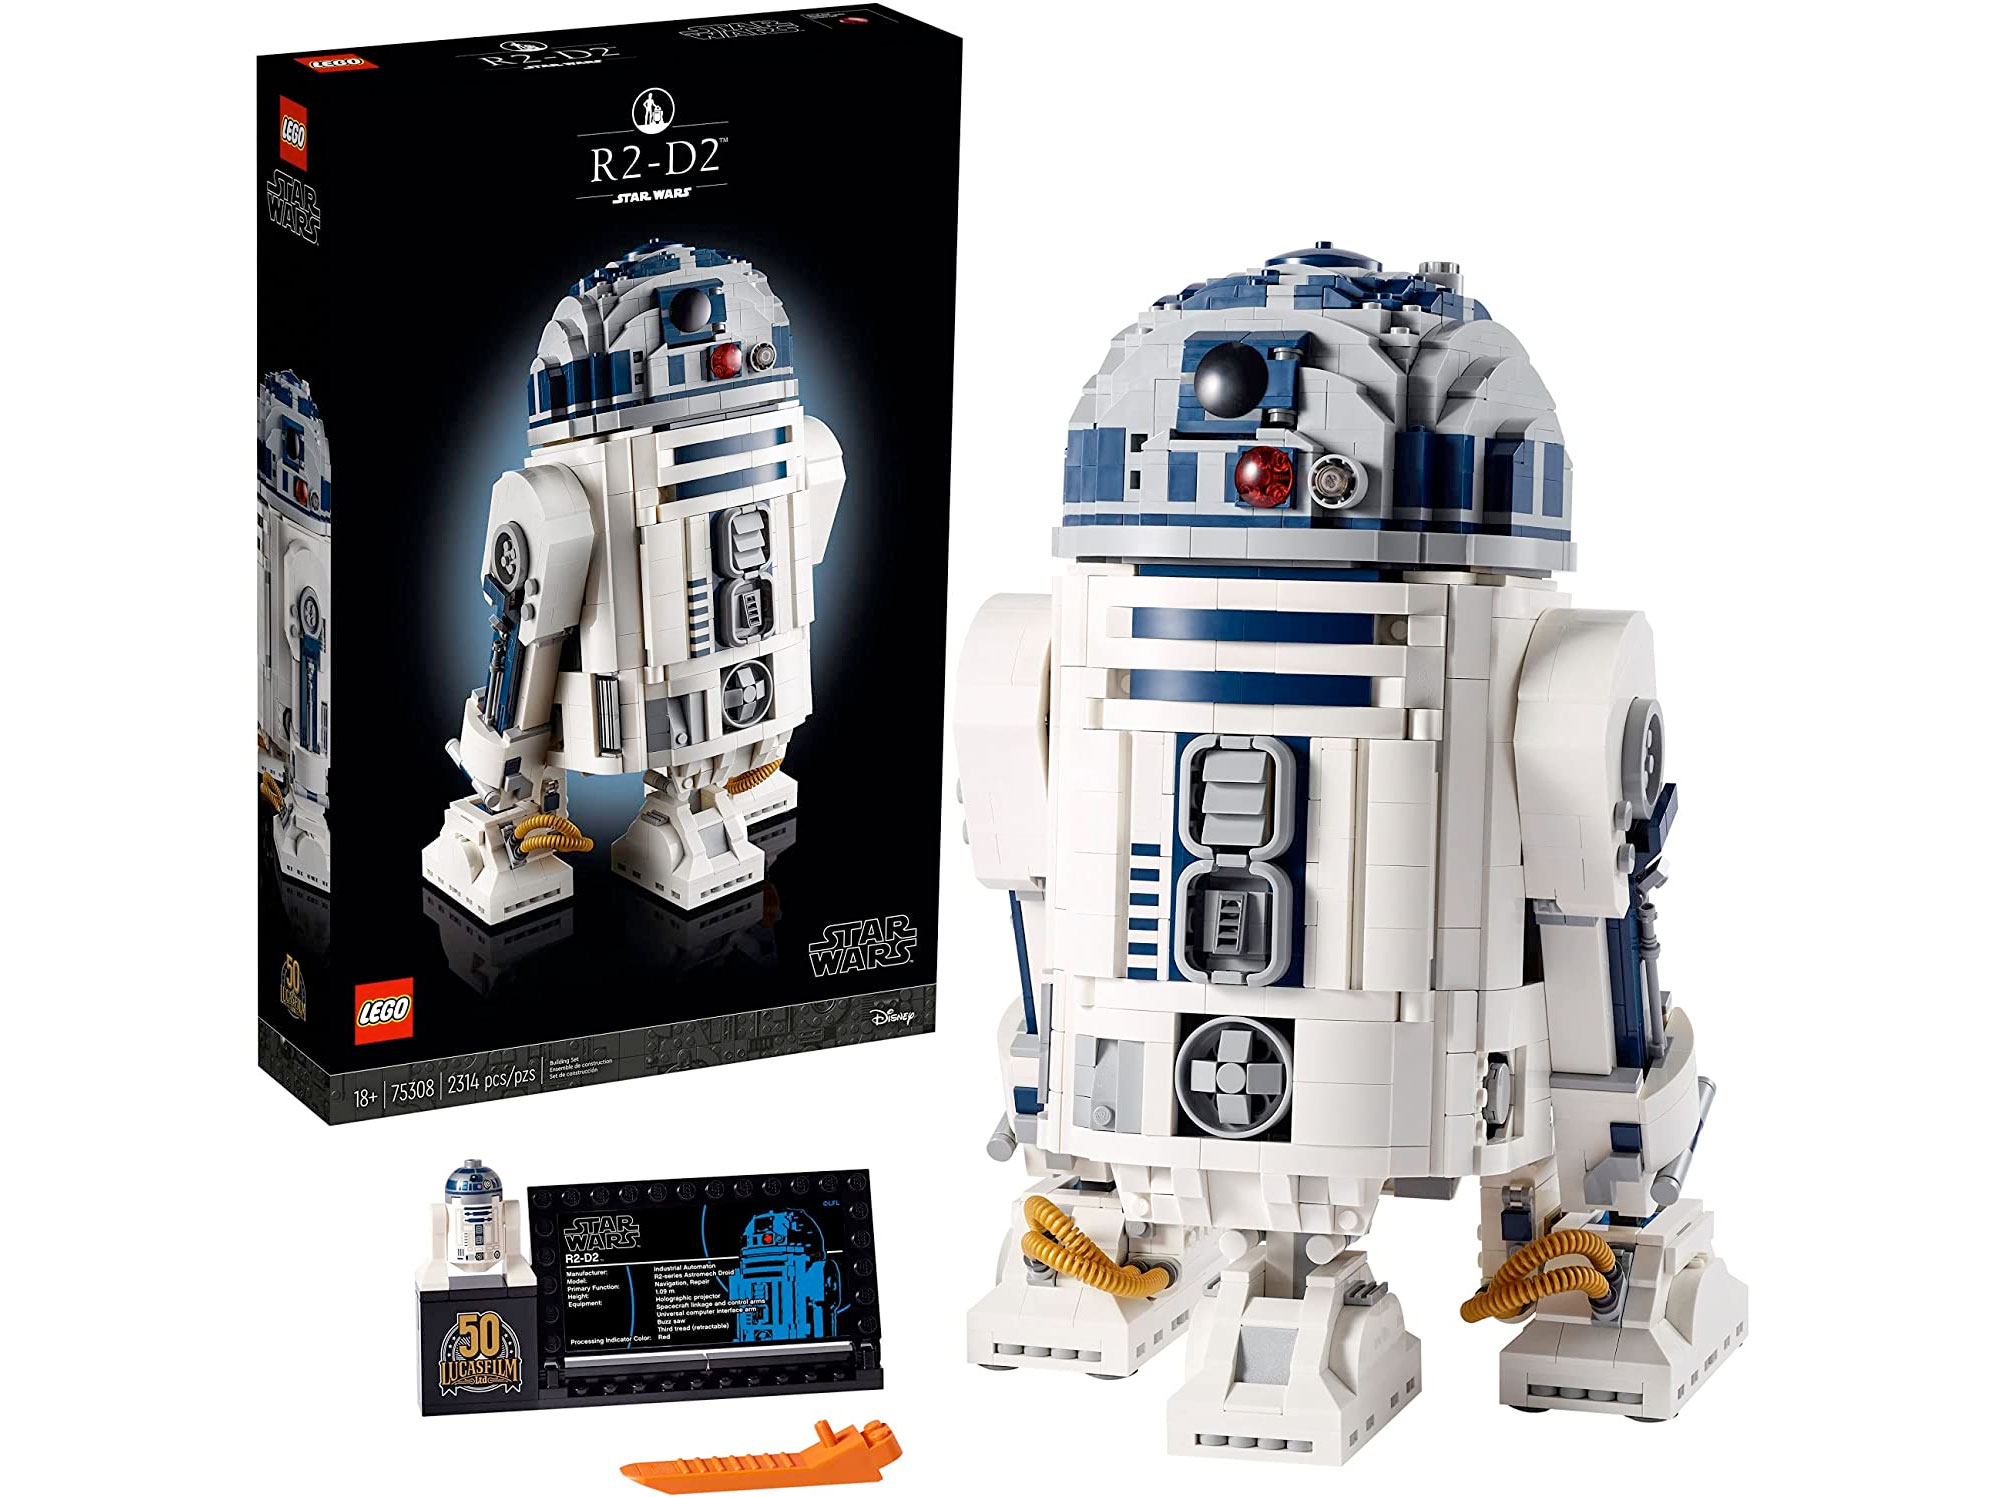 Amazon：LEGO Star Wars R2-D2 75308(2315 pcs)只賣$215.99